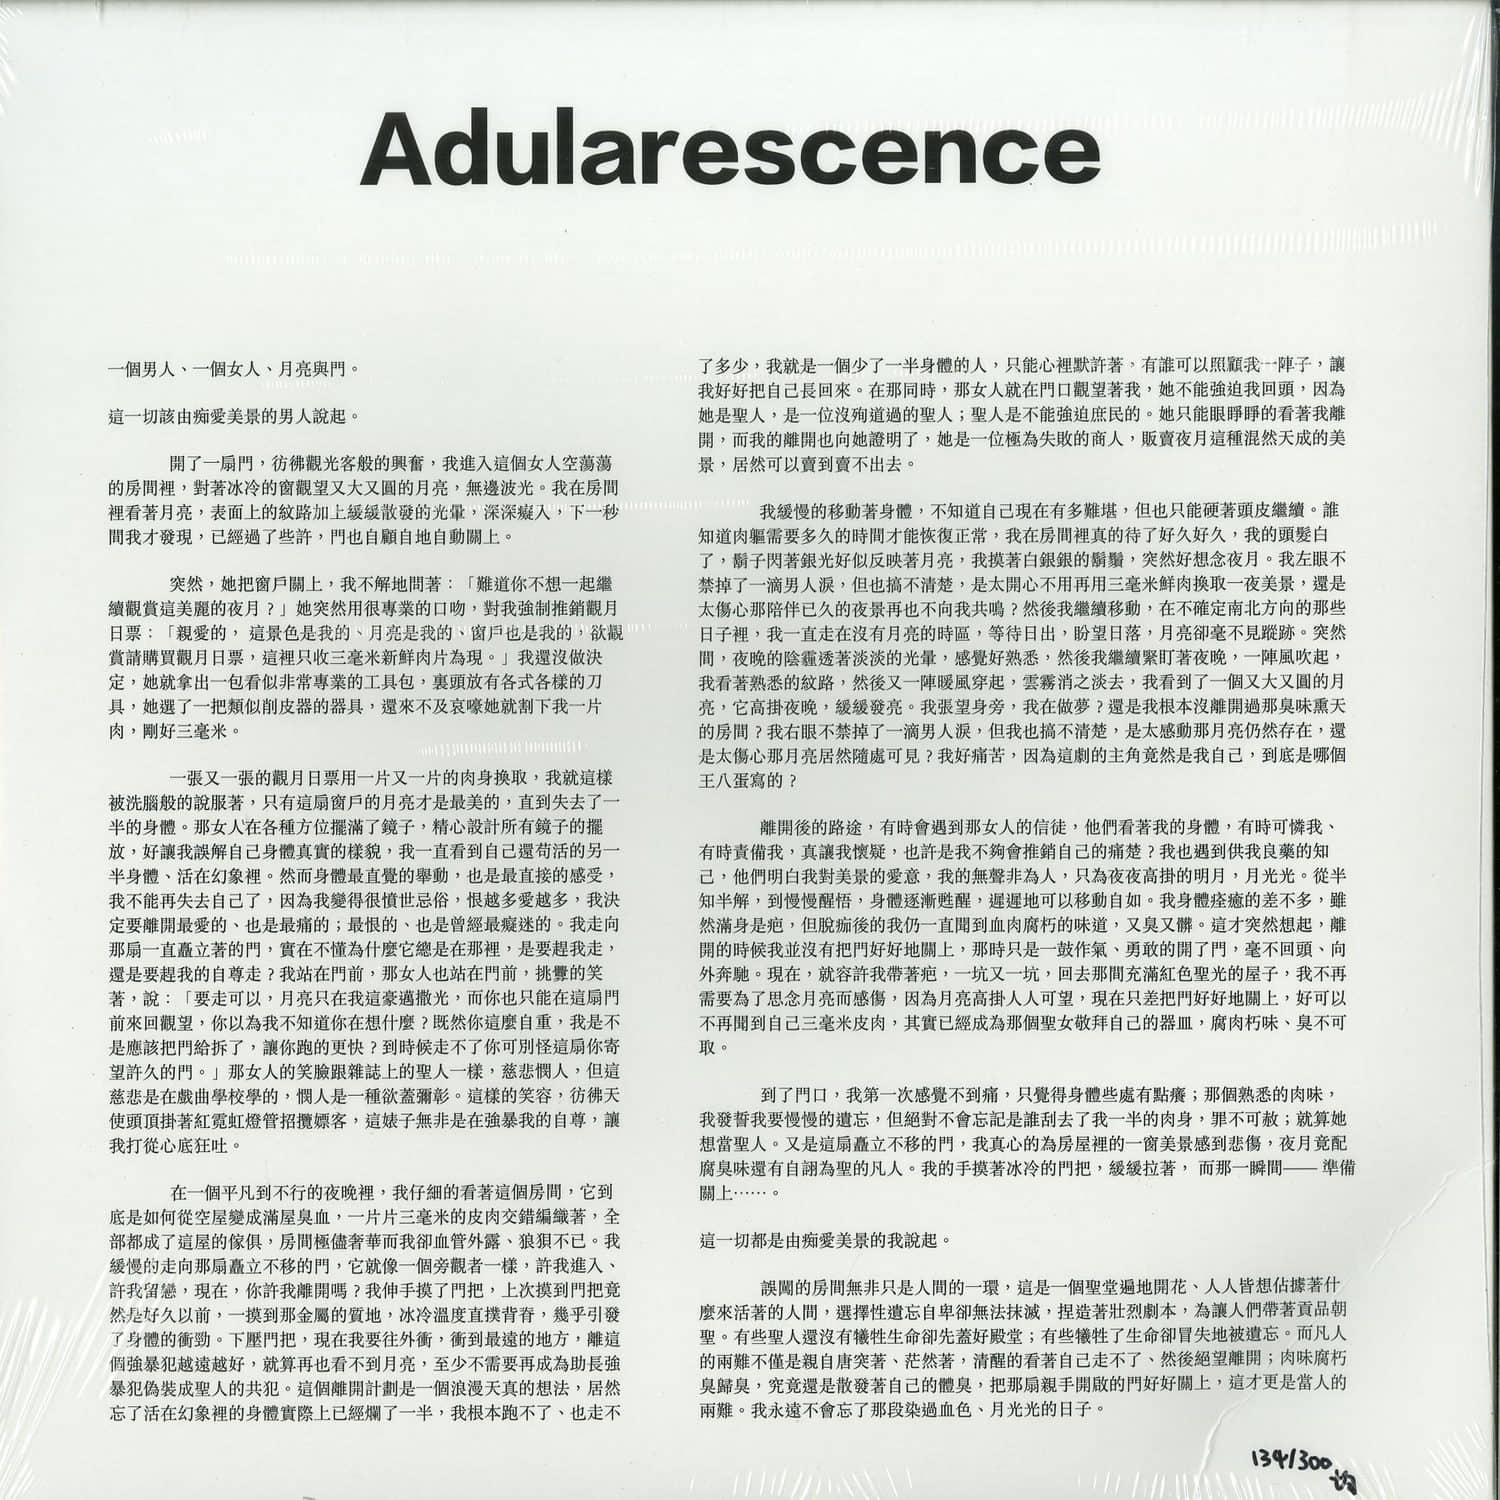 Jing - ADULARESCENCE